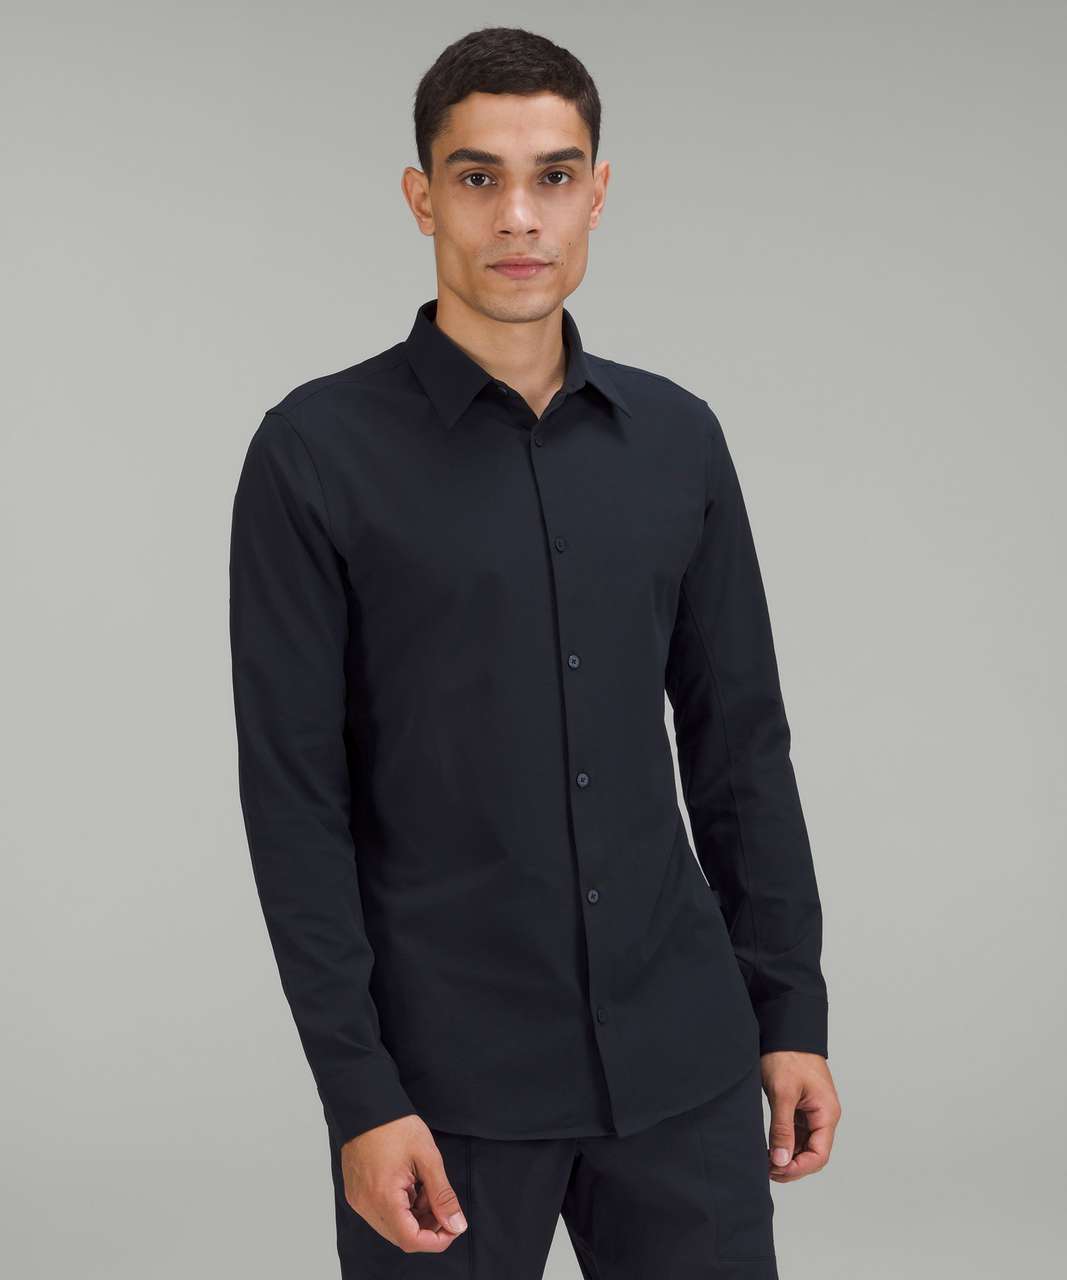 Lululemon New Venture Long Sleeve Shirt - Classic Navy